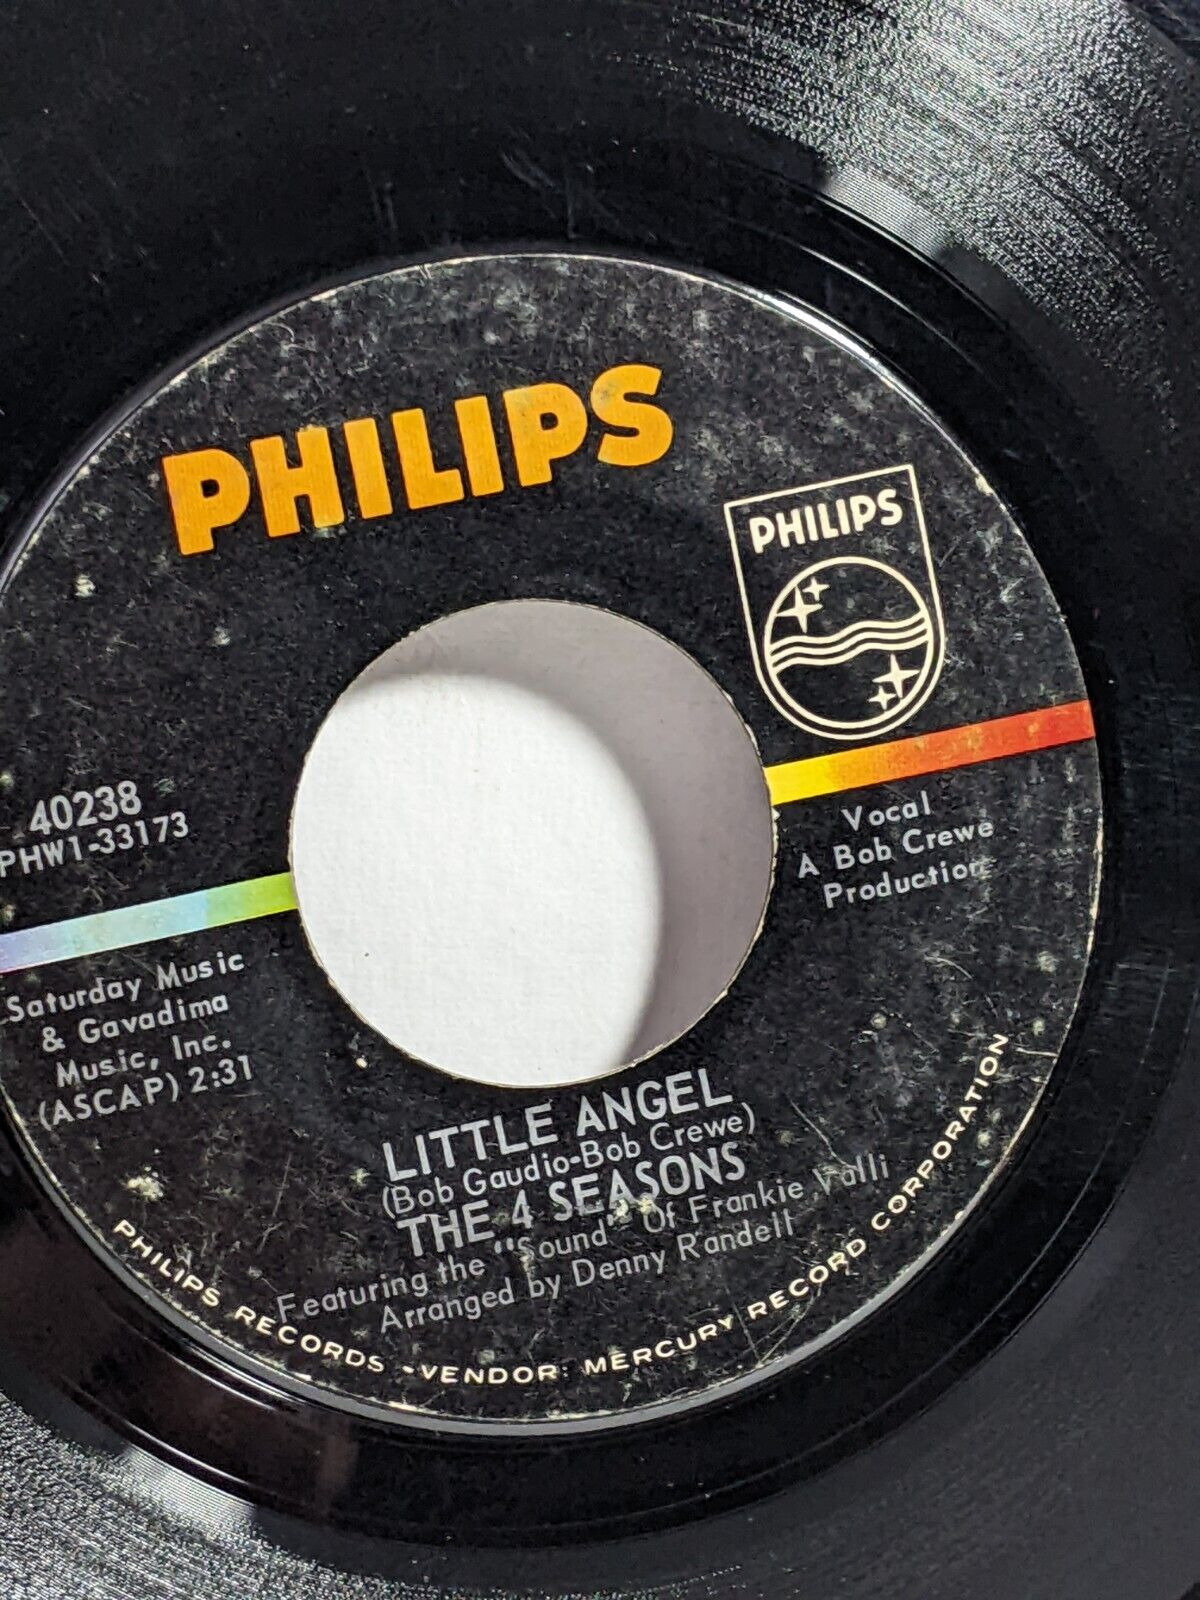 45 - The 4 Seasons - "Big Man In Town / Little Angel" - Phillips (1964)